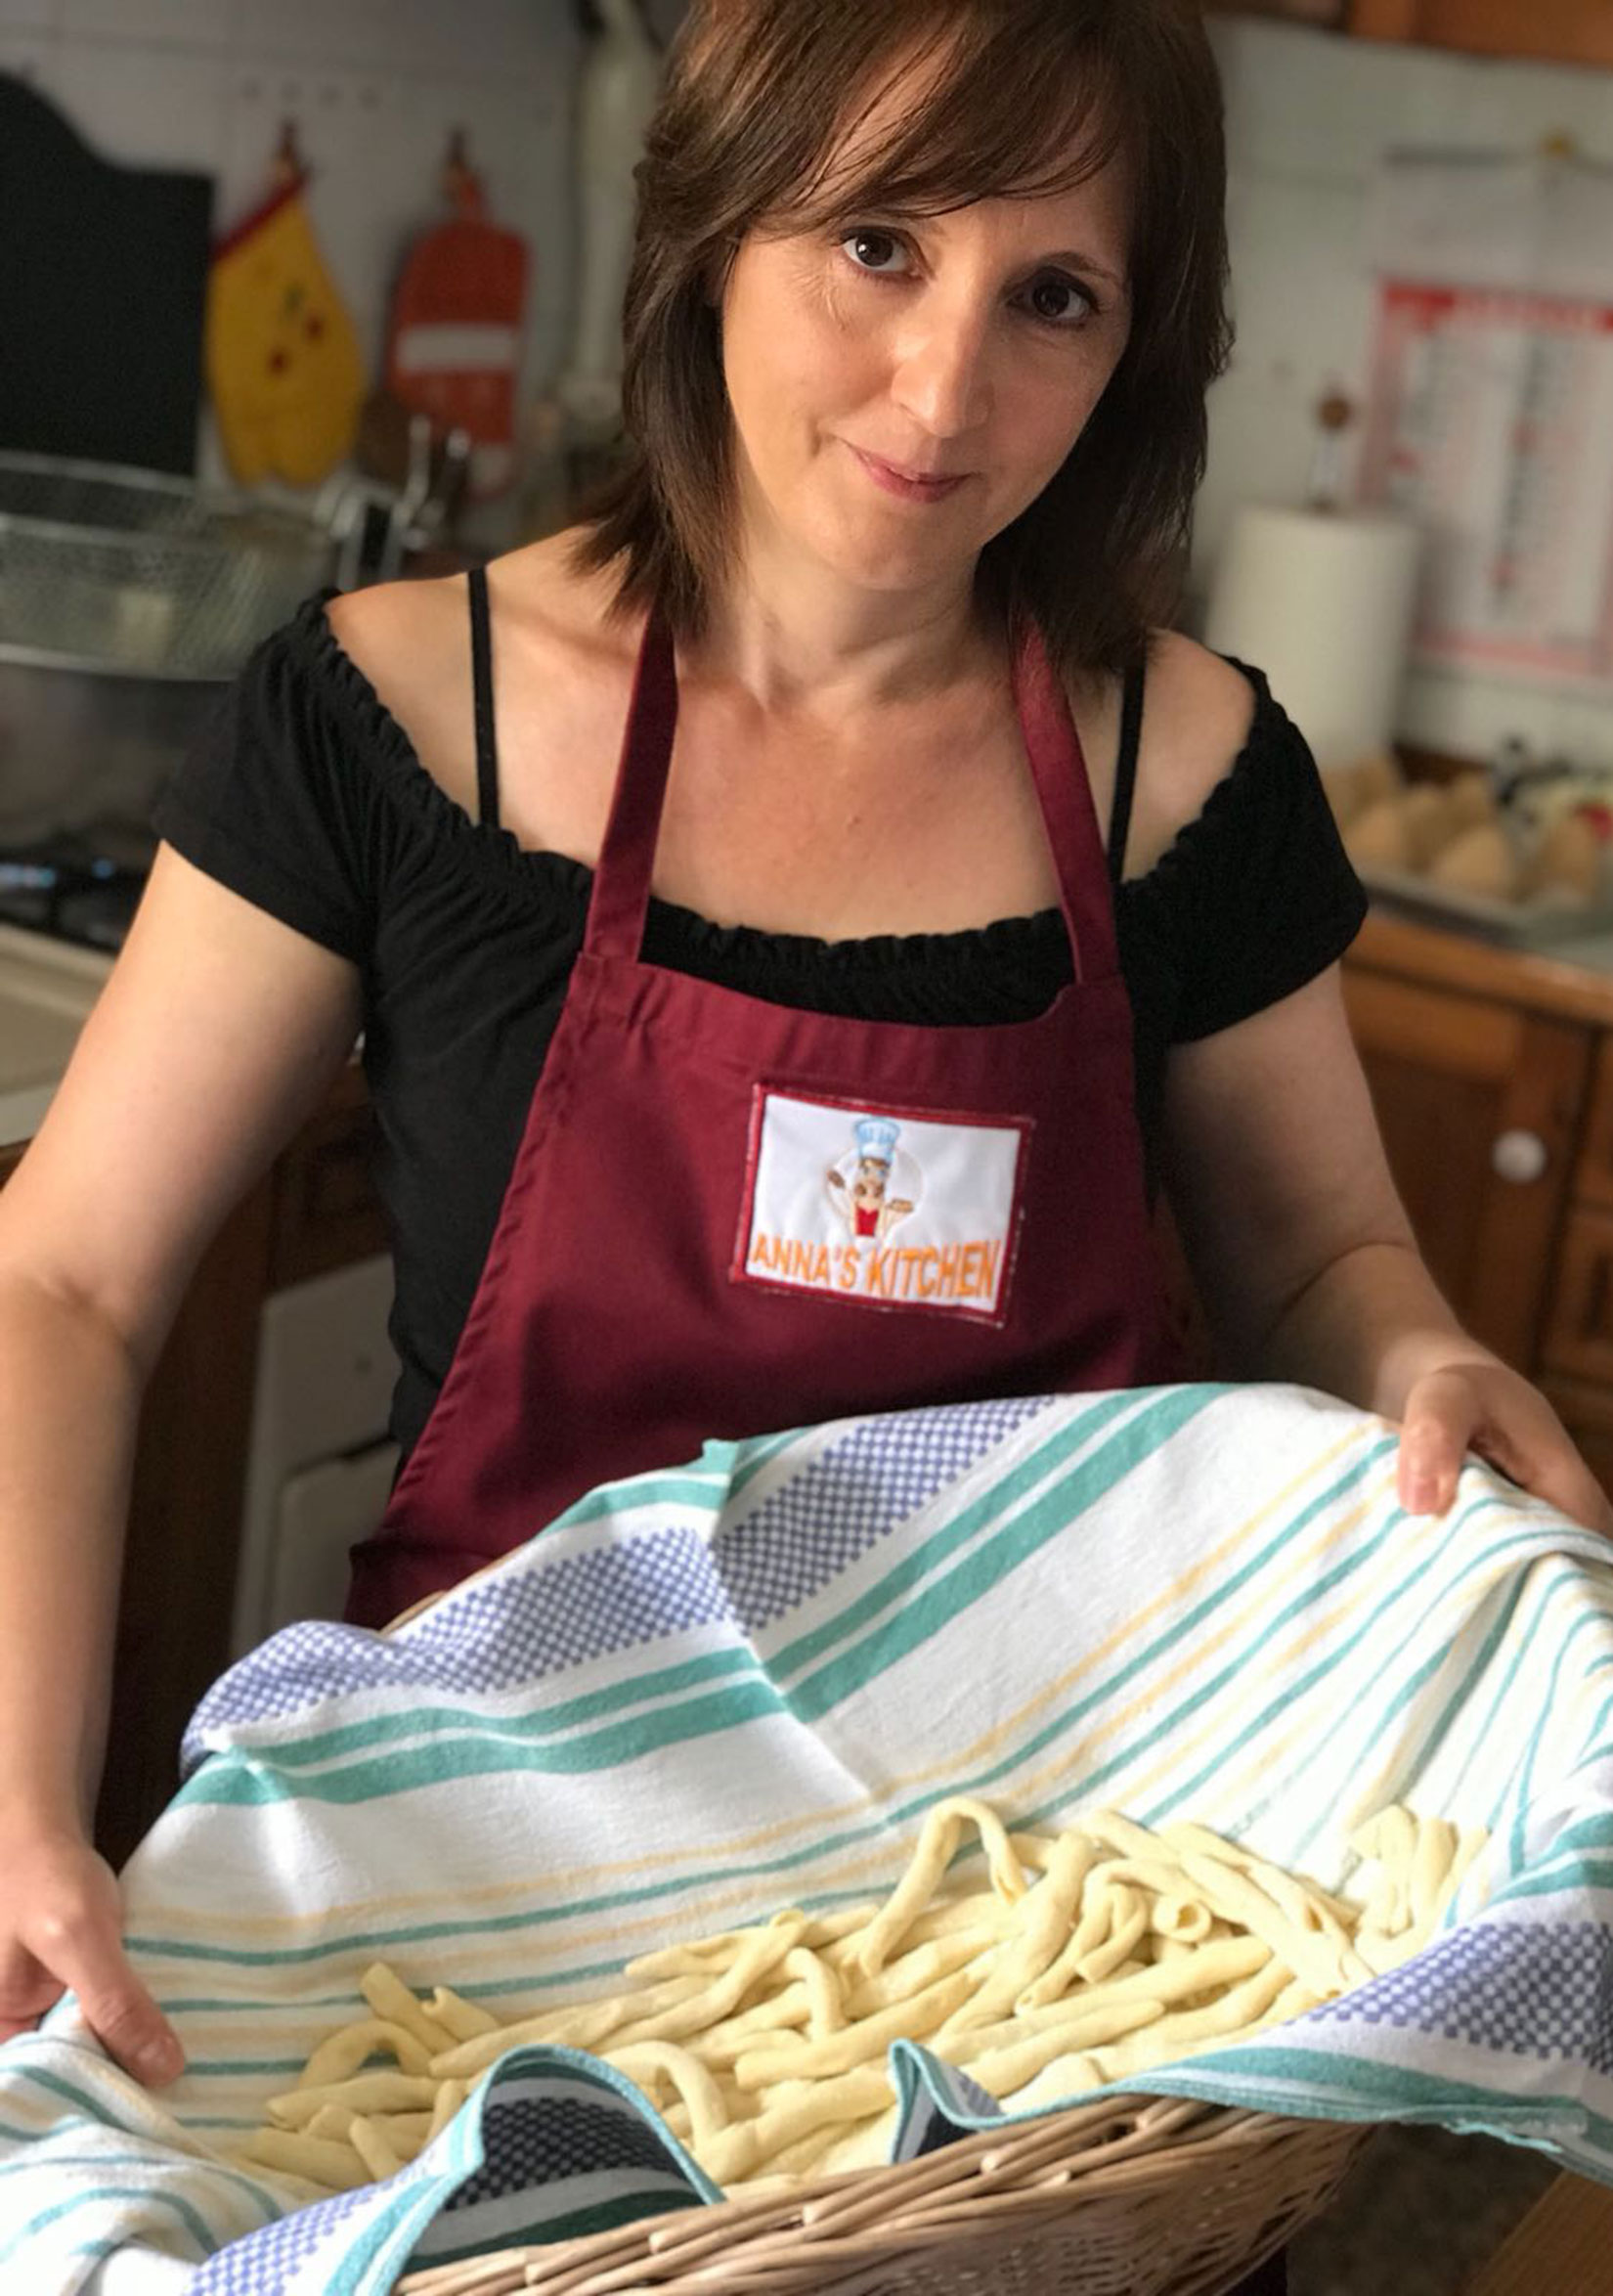 Anna's Kitchen - Homemade Pasta & Sicilian Food